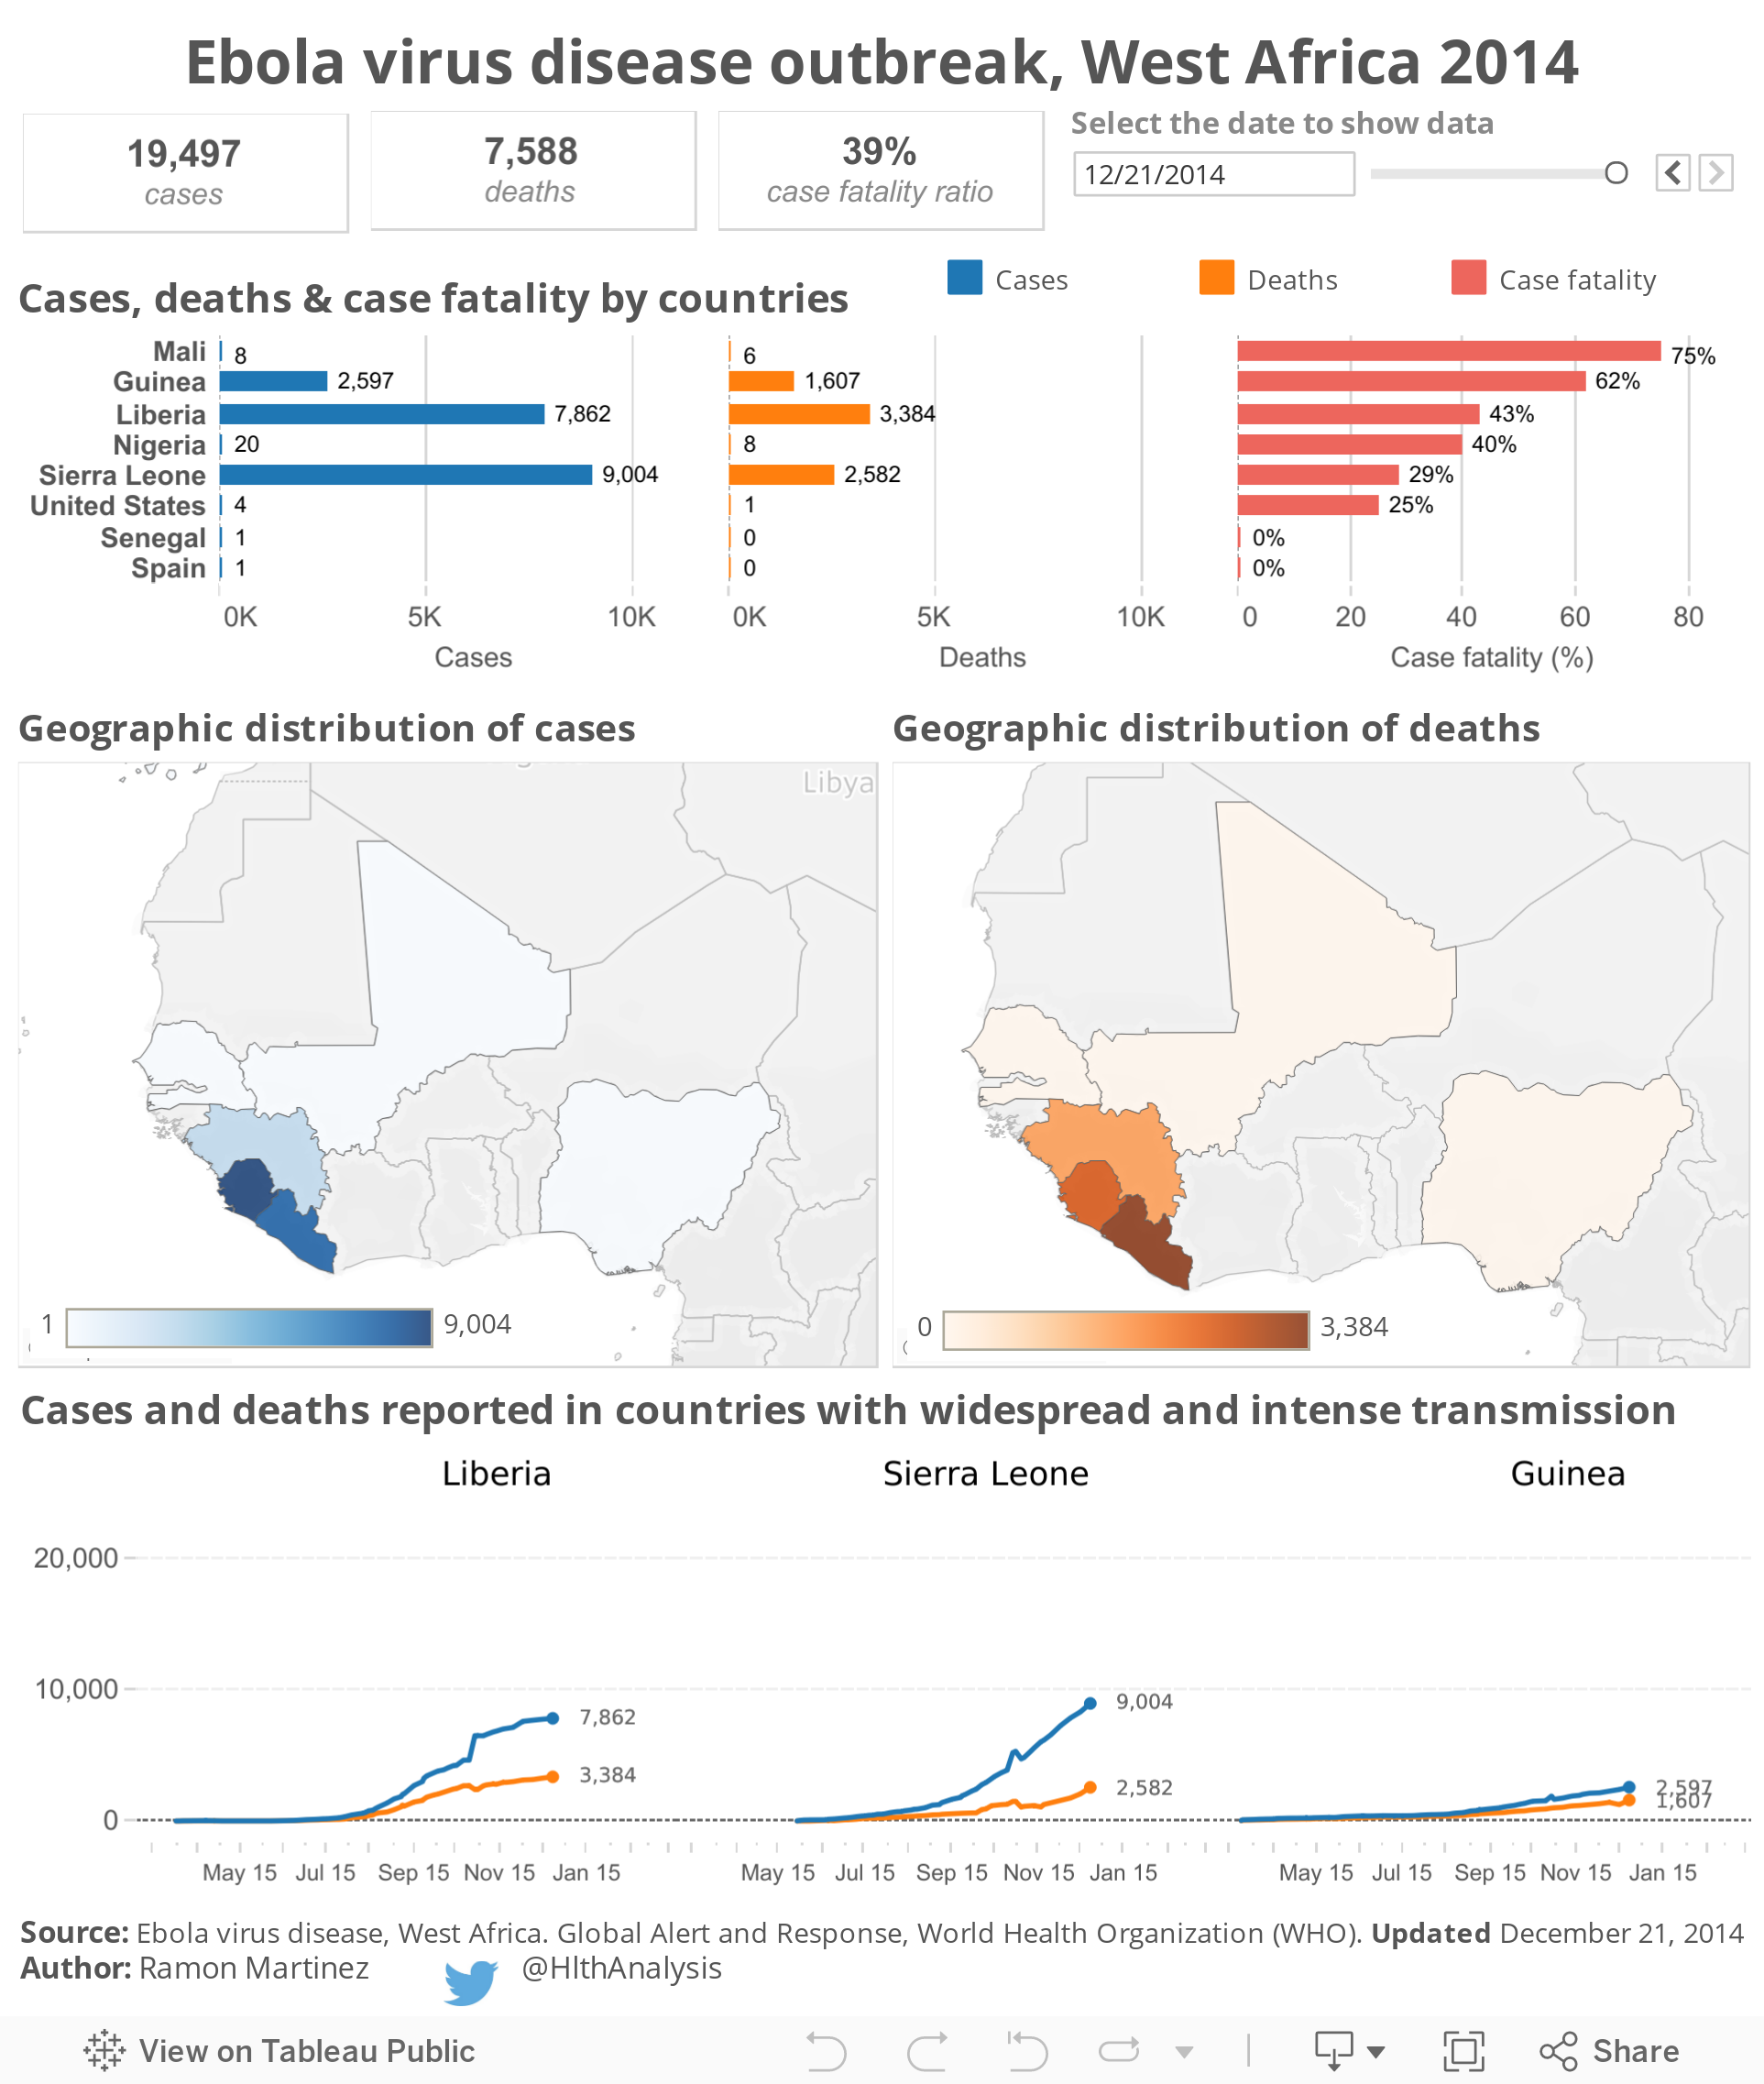 Ebola virus disease outbreak, West Africa 2014 